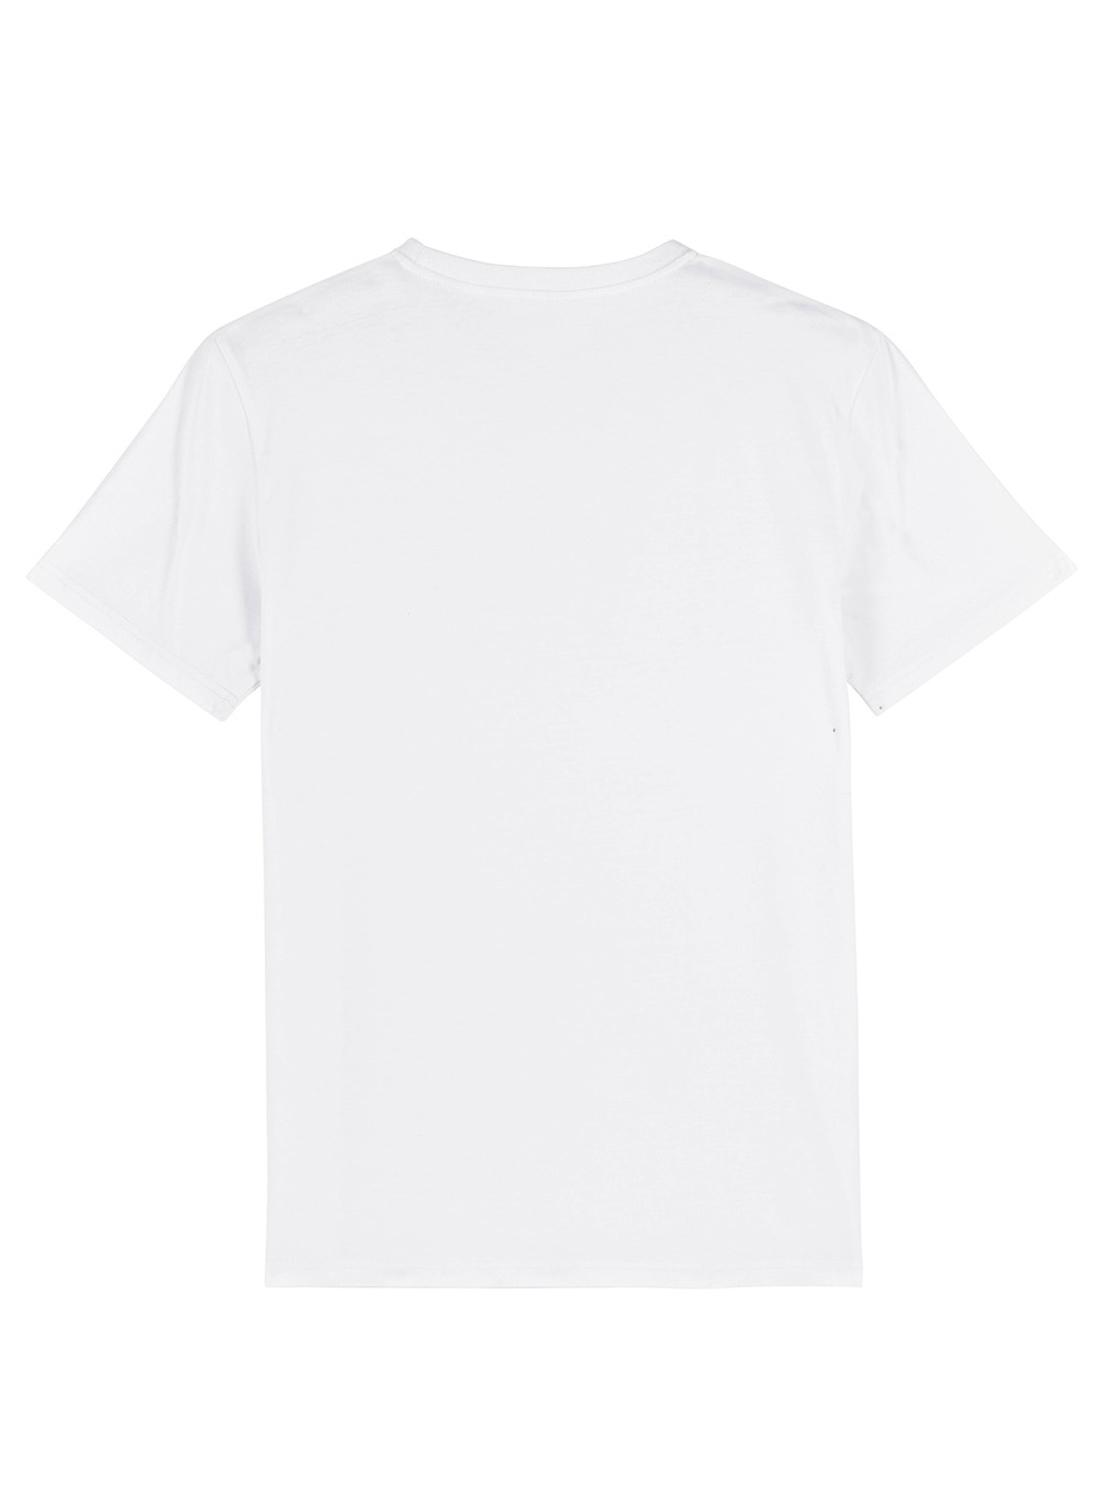 T-Shirt Klout Tsunami Bianco per Donna e Uomo